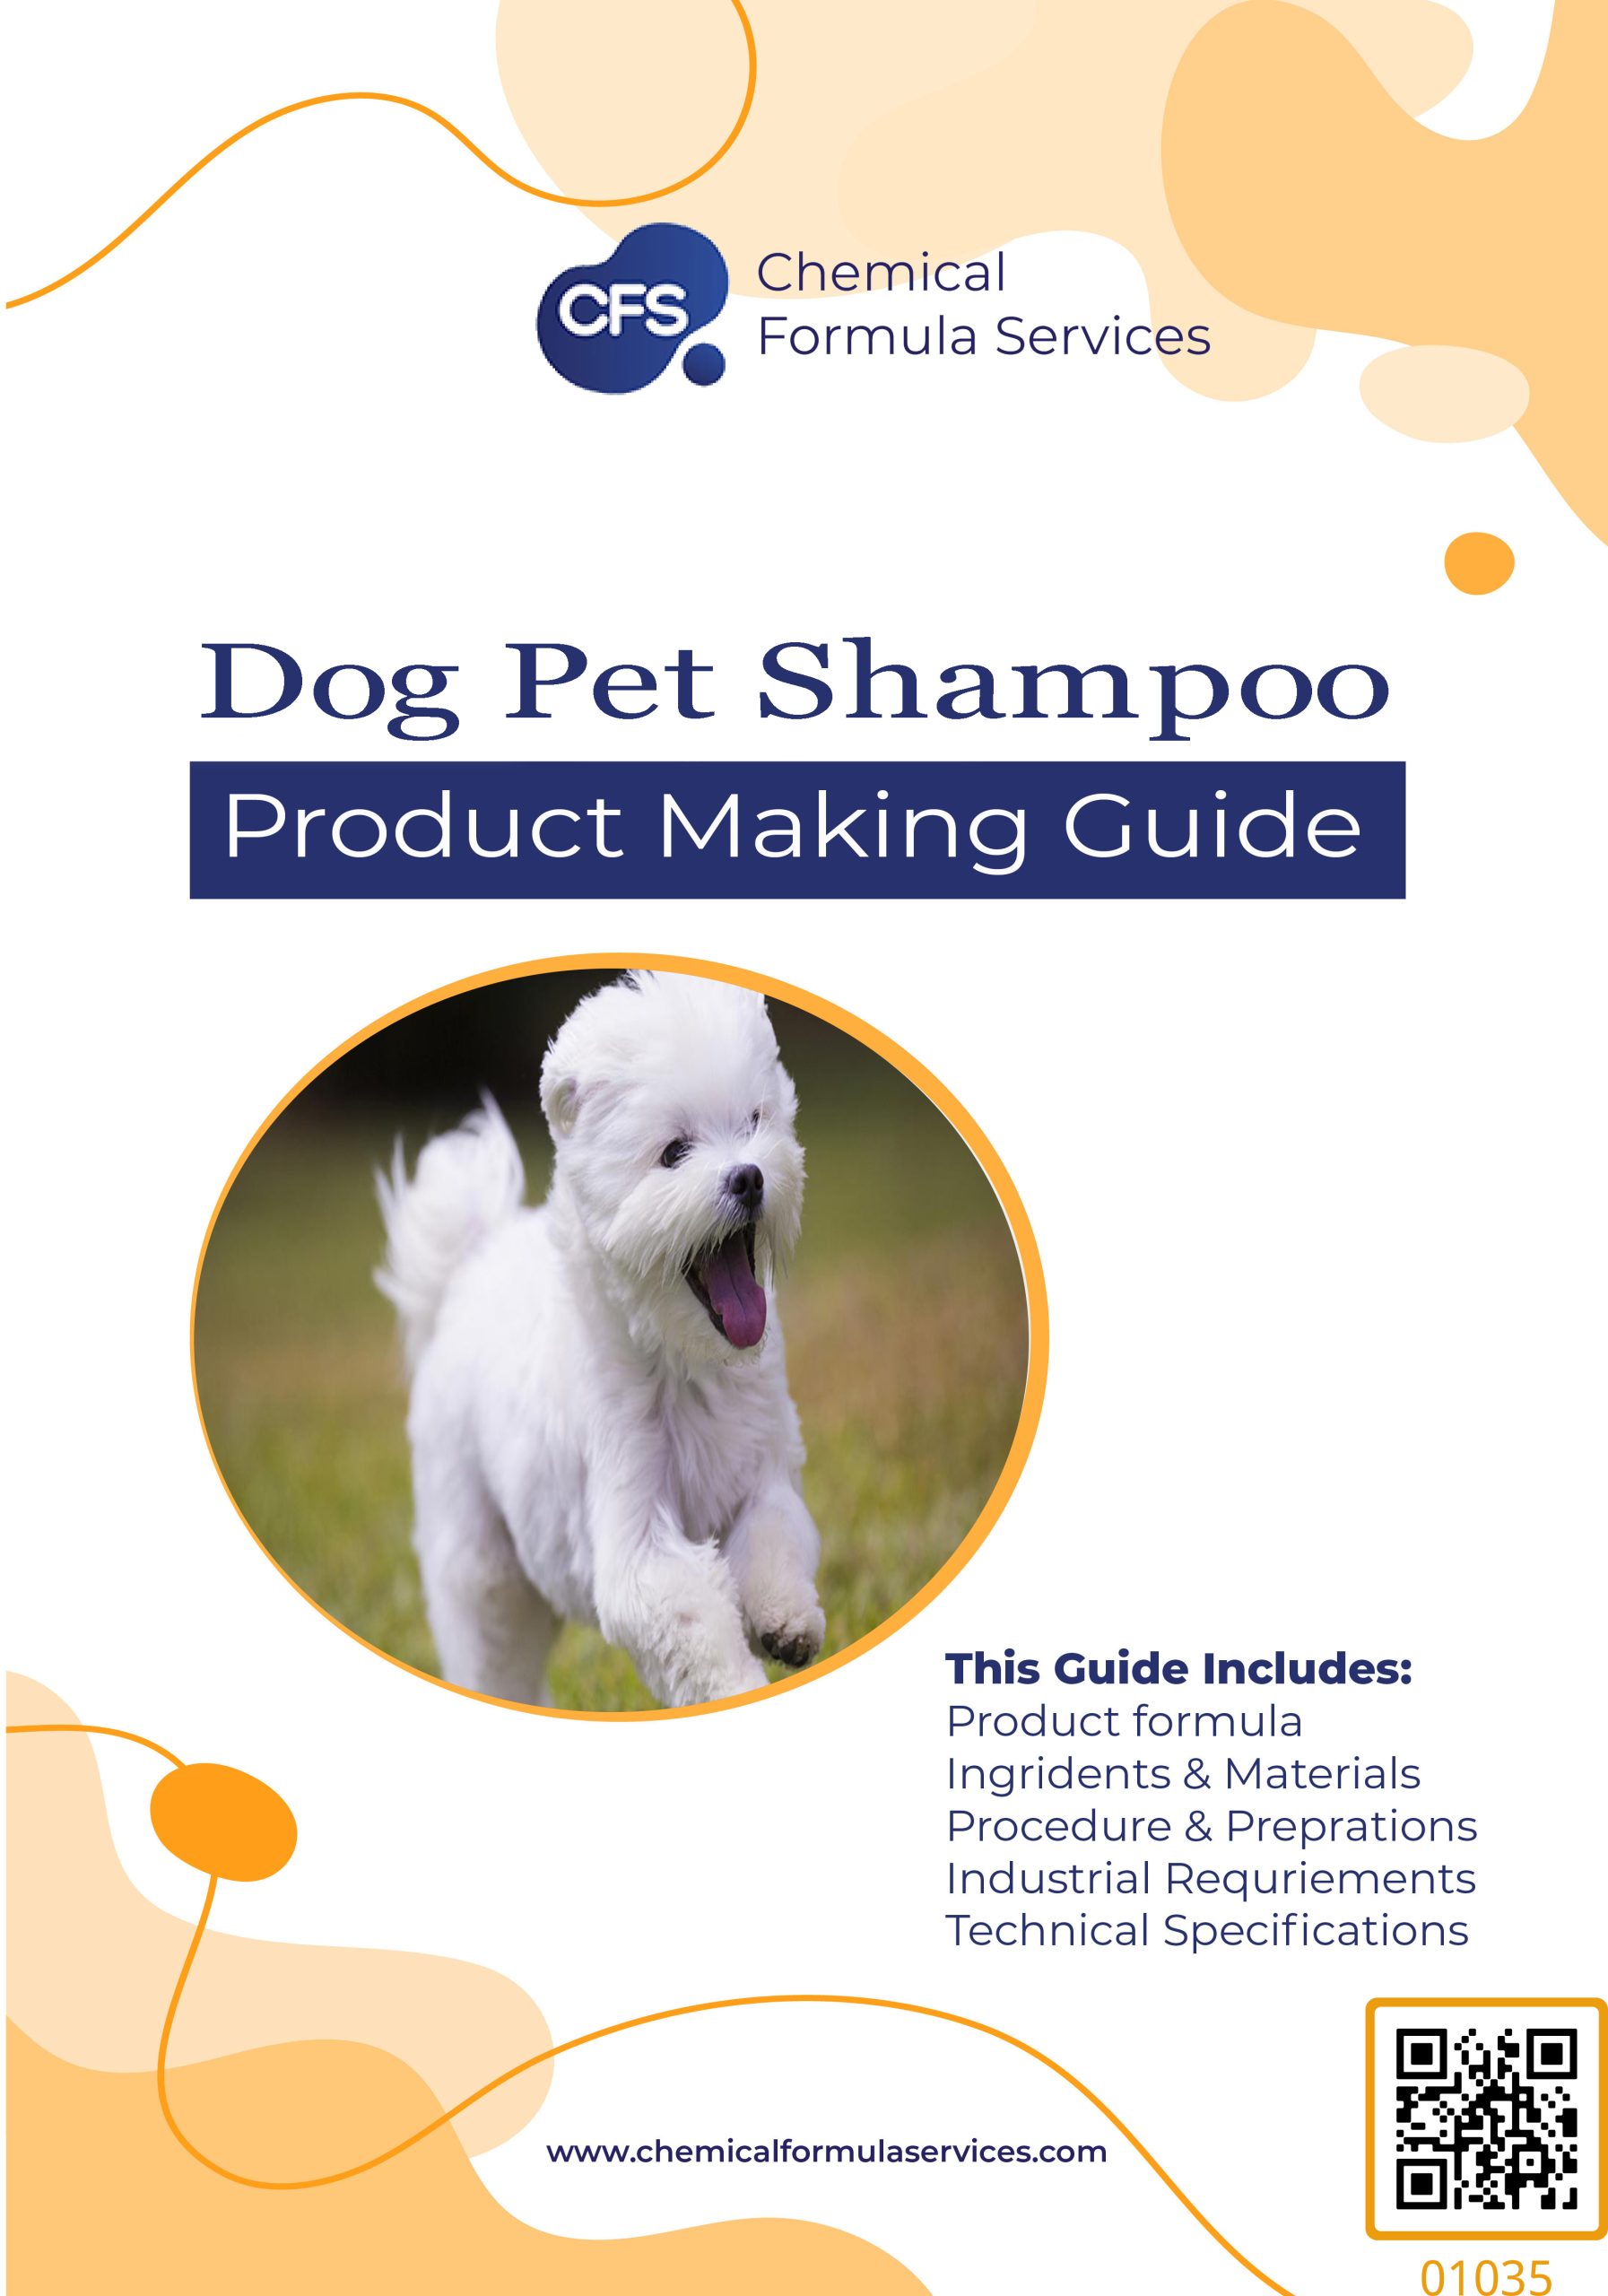 Dog shampoo formulation